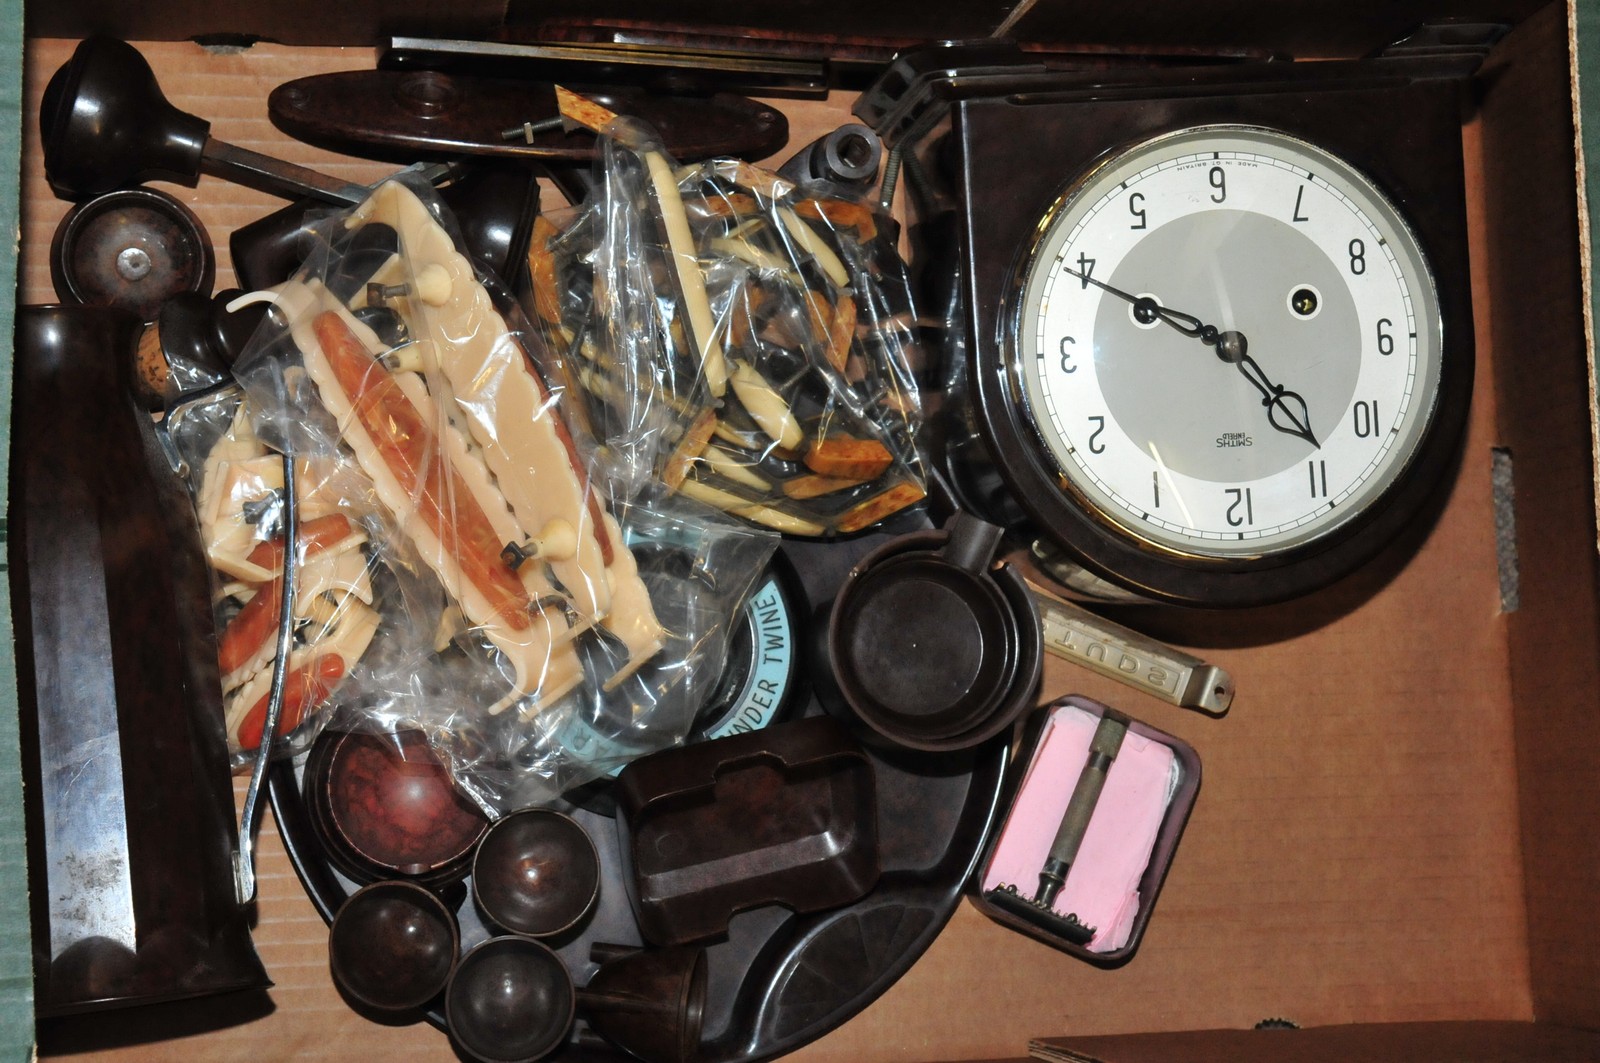 A box of mixed Bakelite items including a clock and door handles